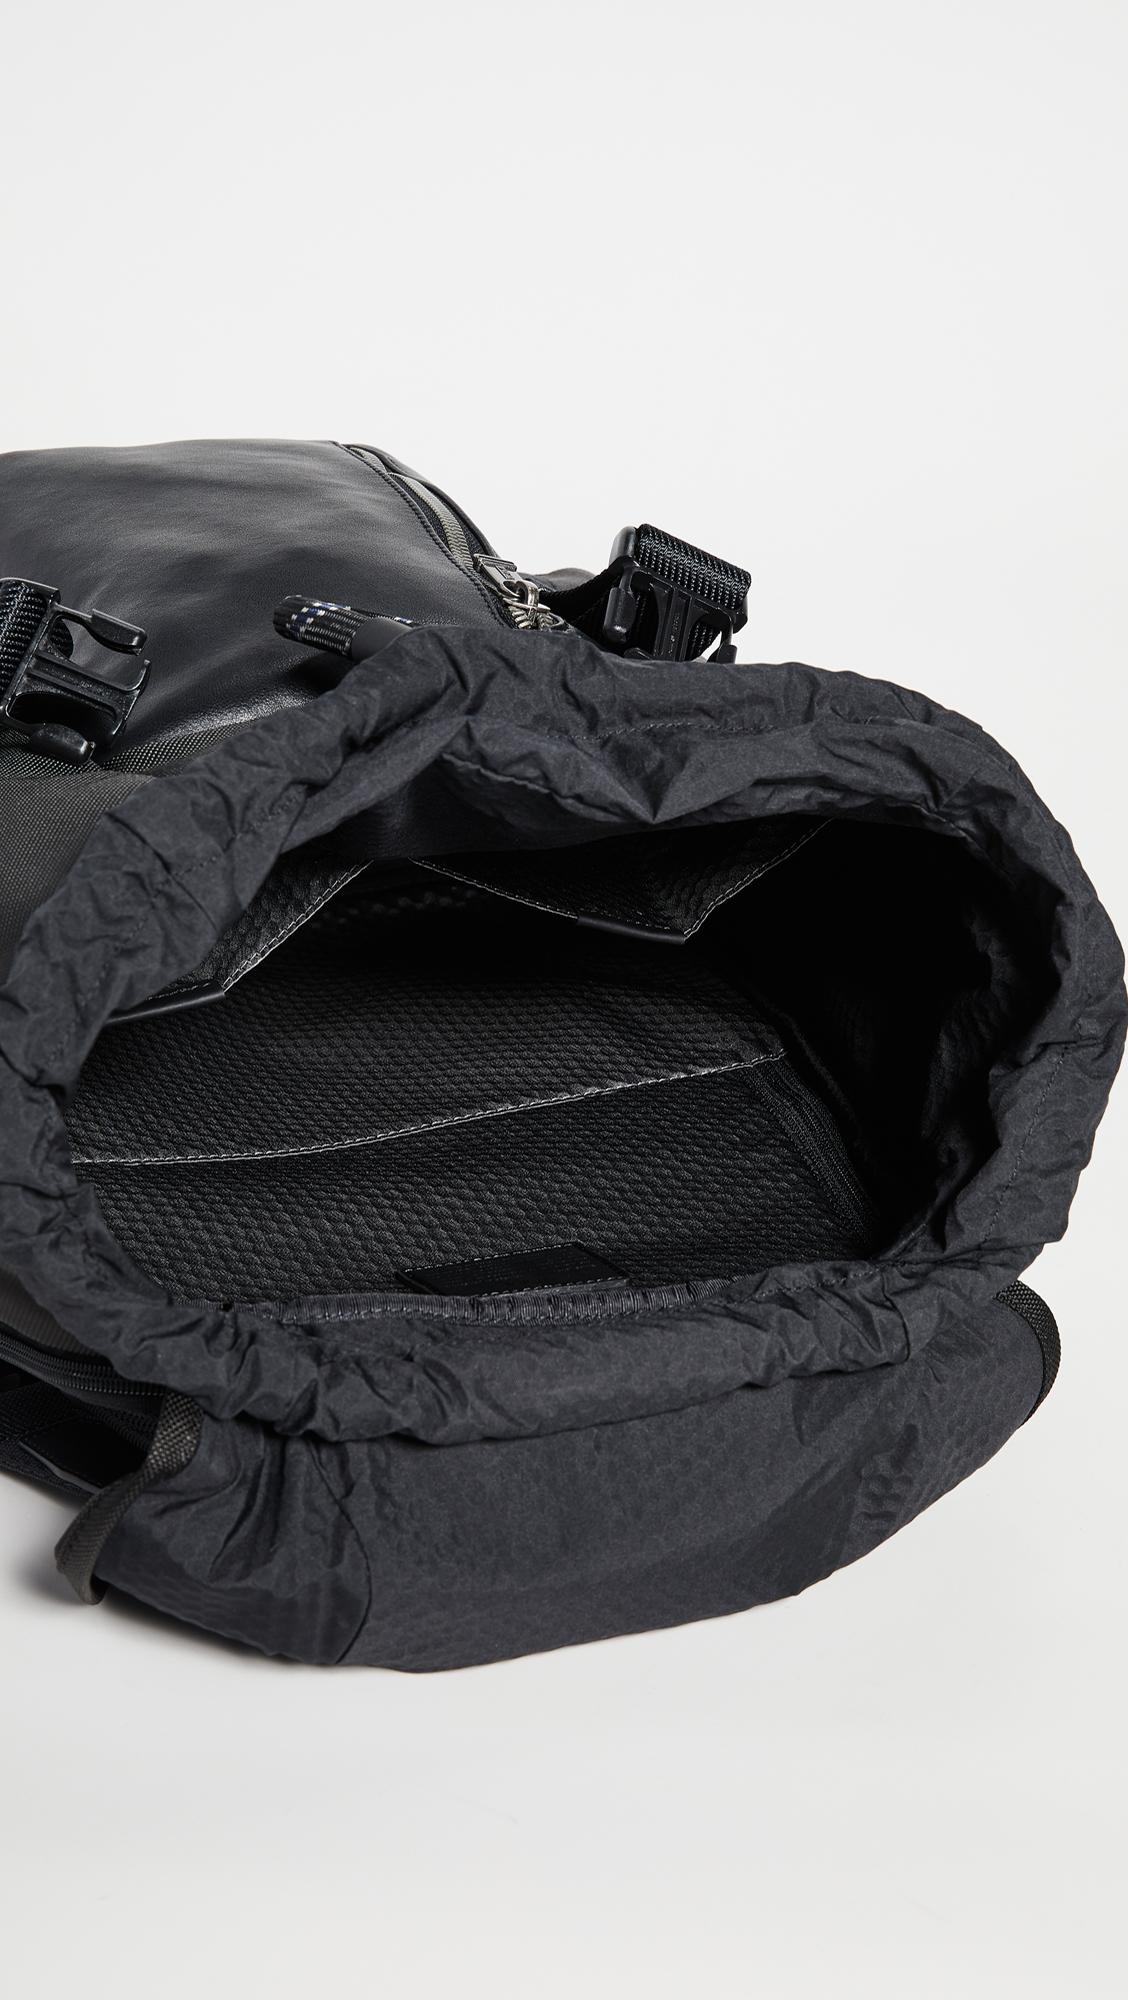 Tumi Alpha Bravo Douglas Backpack in Black for Men - Lyst